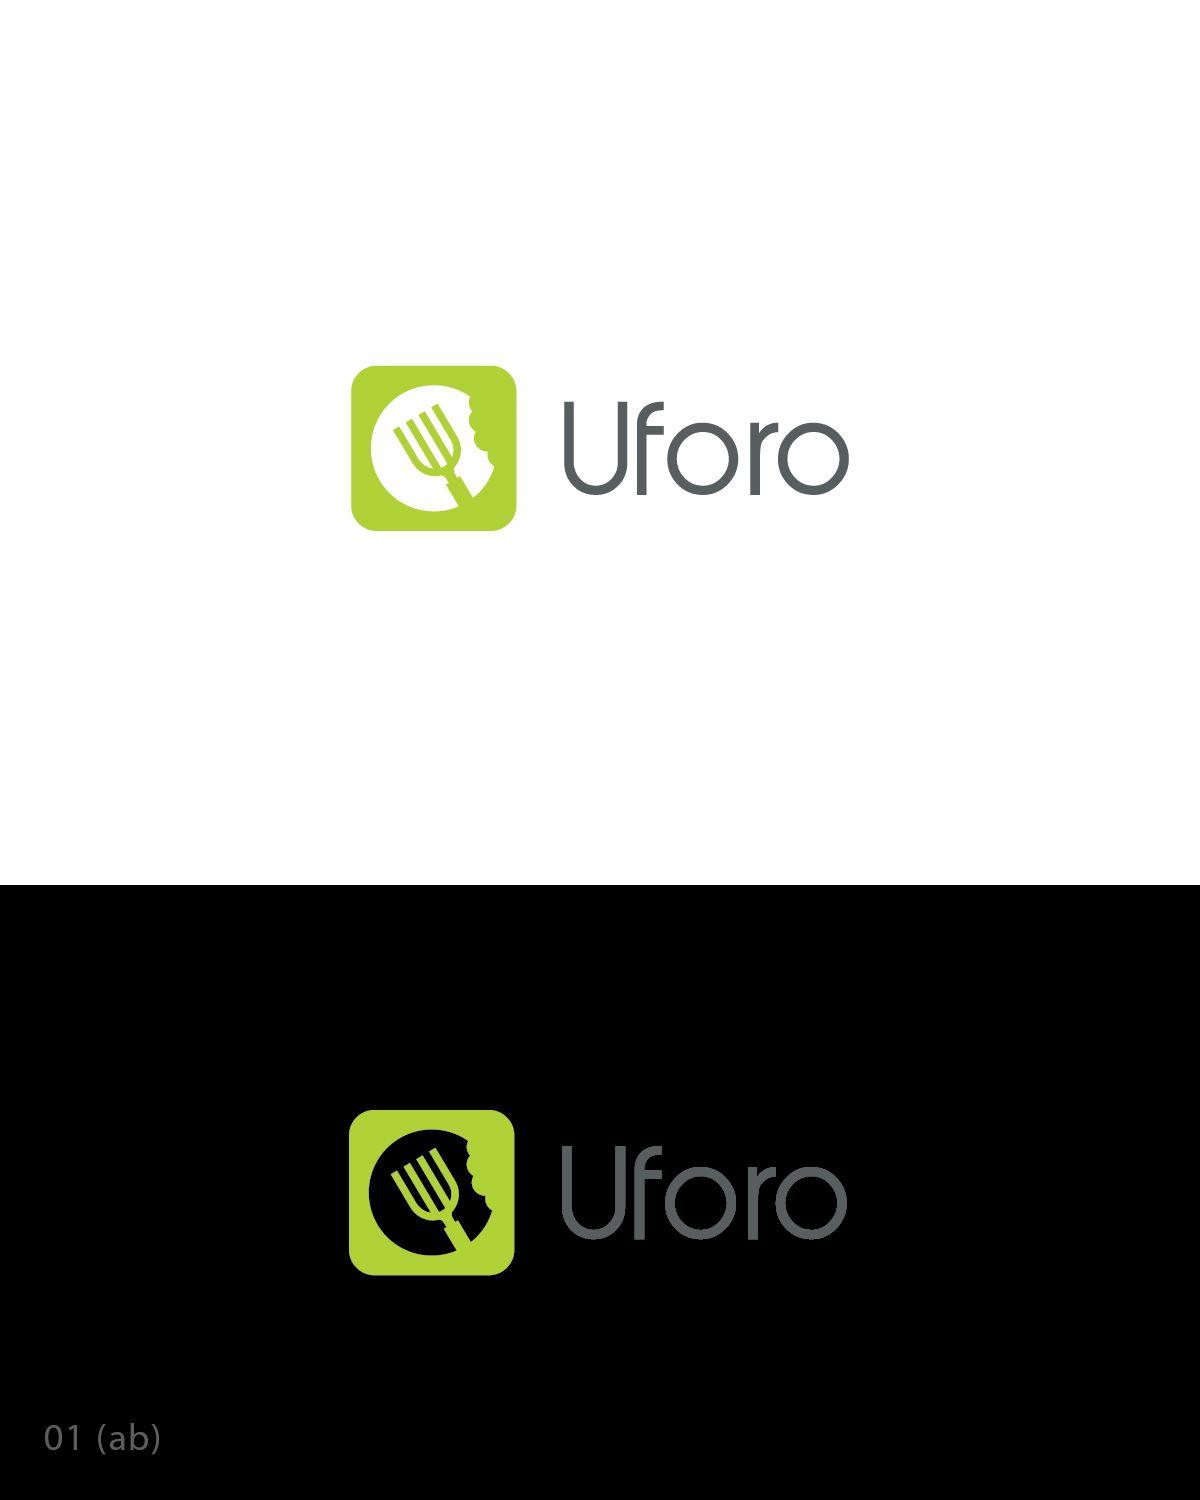 Food App Logo - Serious, Modern Logo Design for Uforo by Esolbiz | Design #9646589